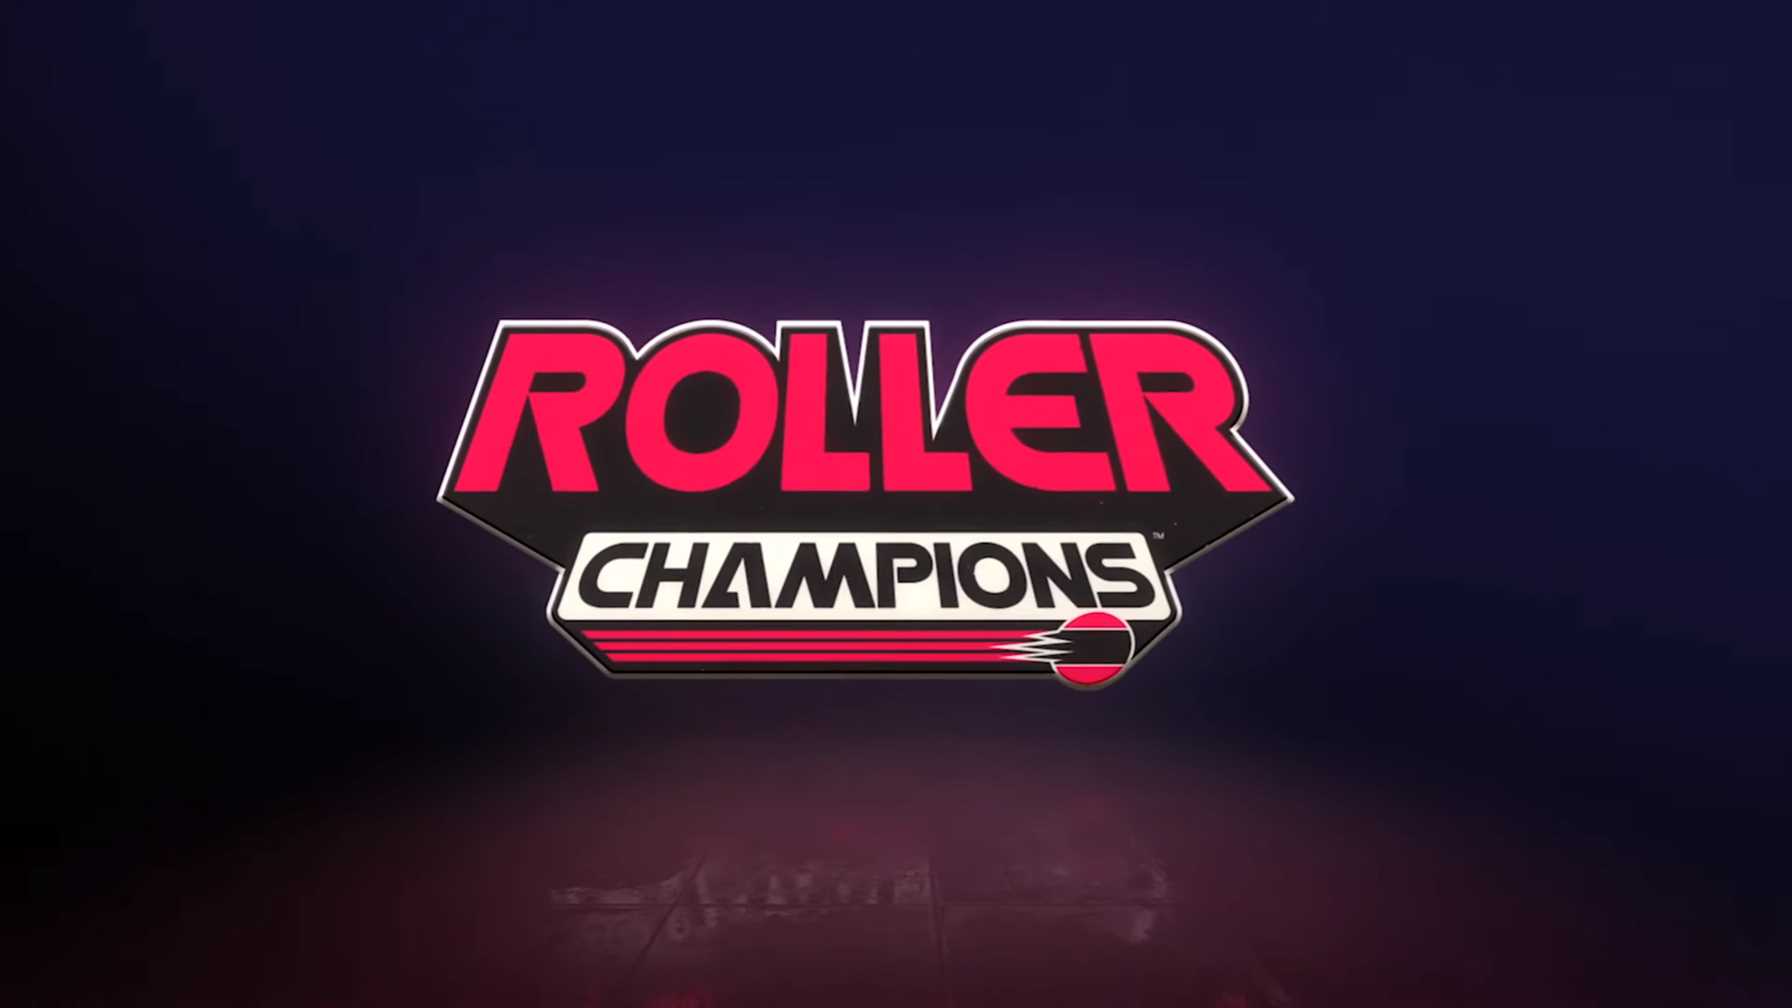 roller champions